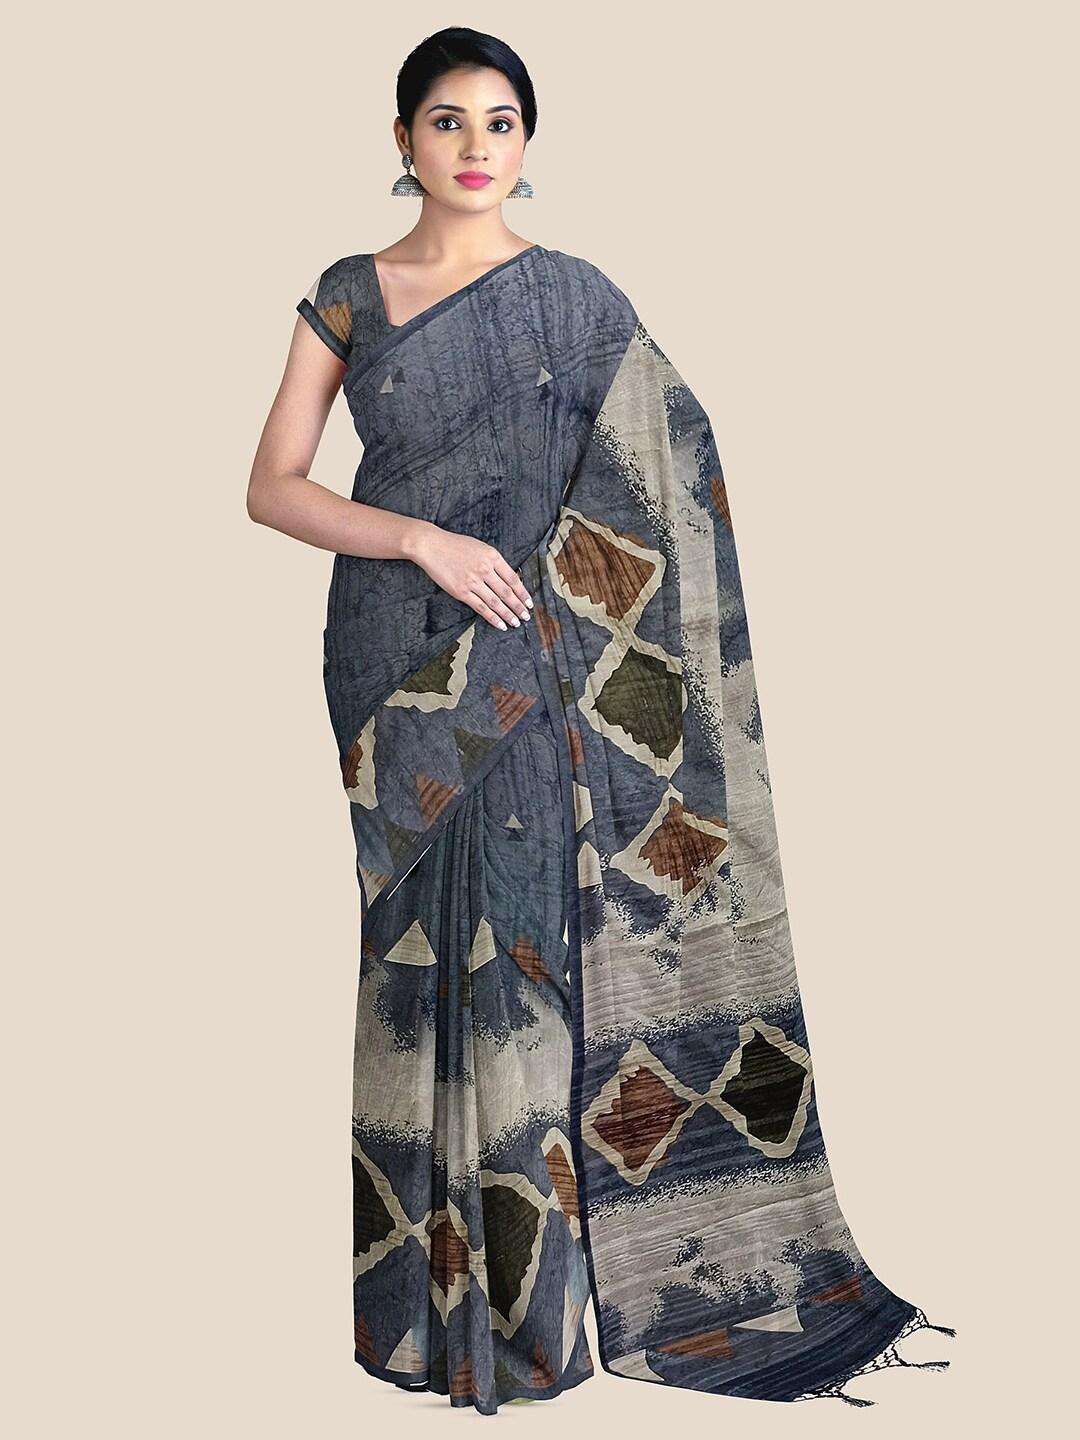 The Chennai Silks Batik Printed Saree